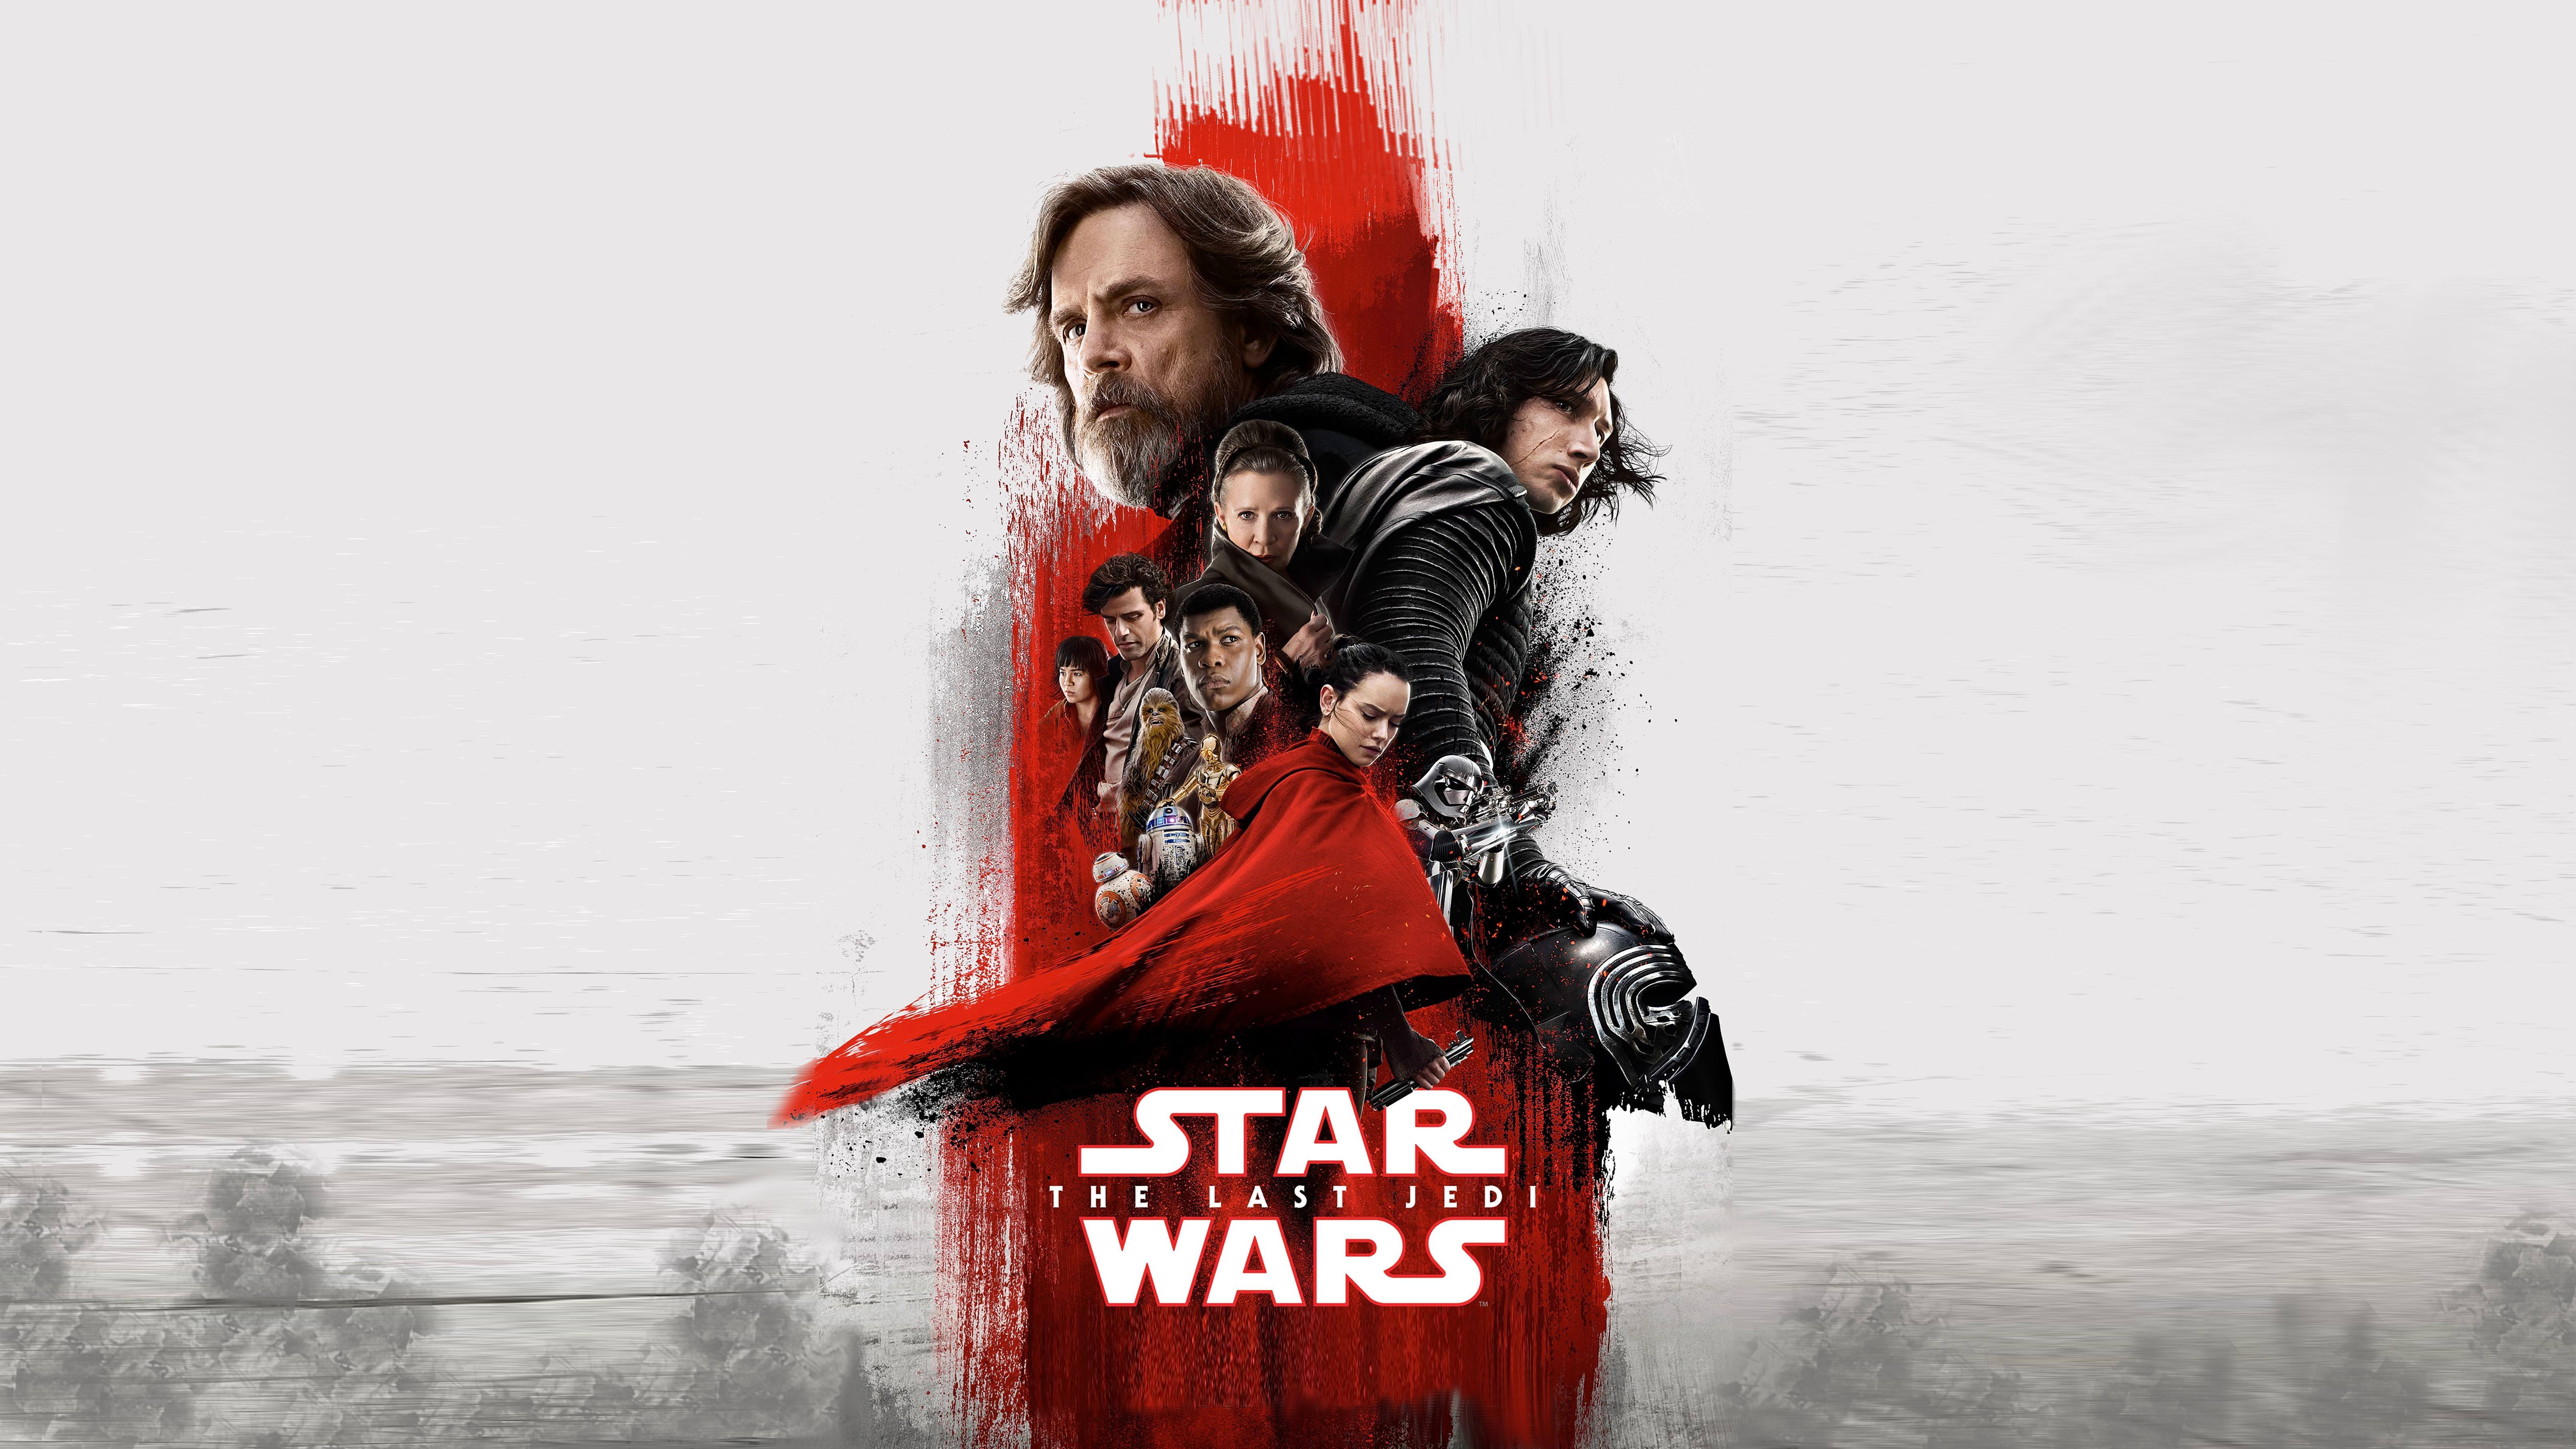 Star Wars: Episode VIII Last Jedi Poster